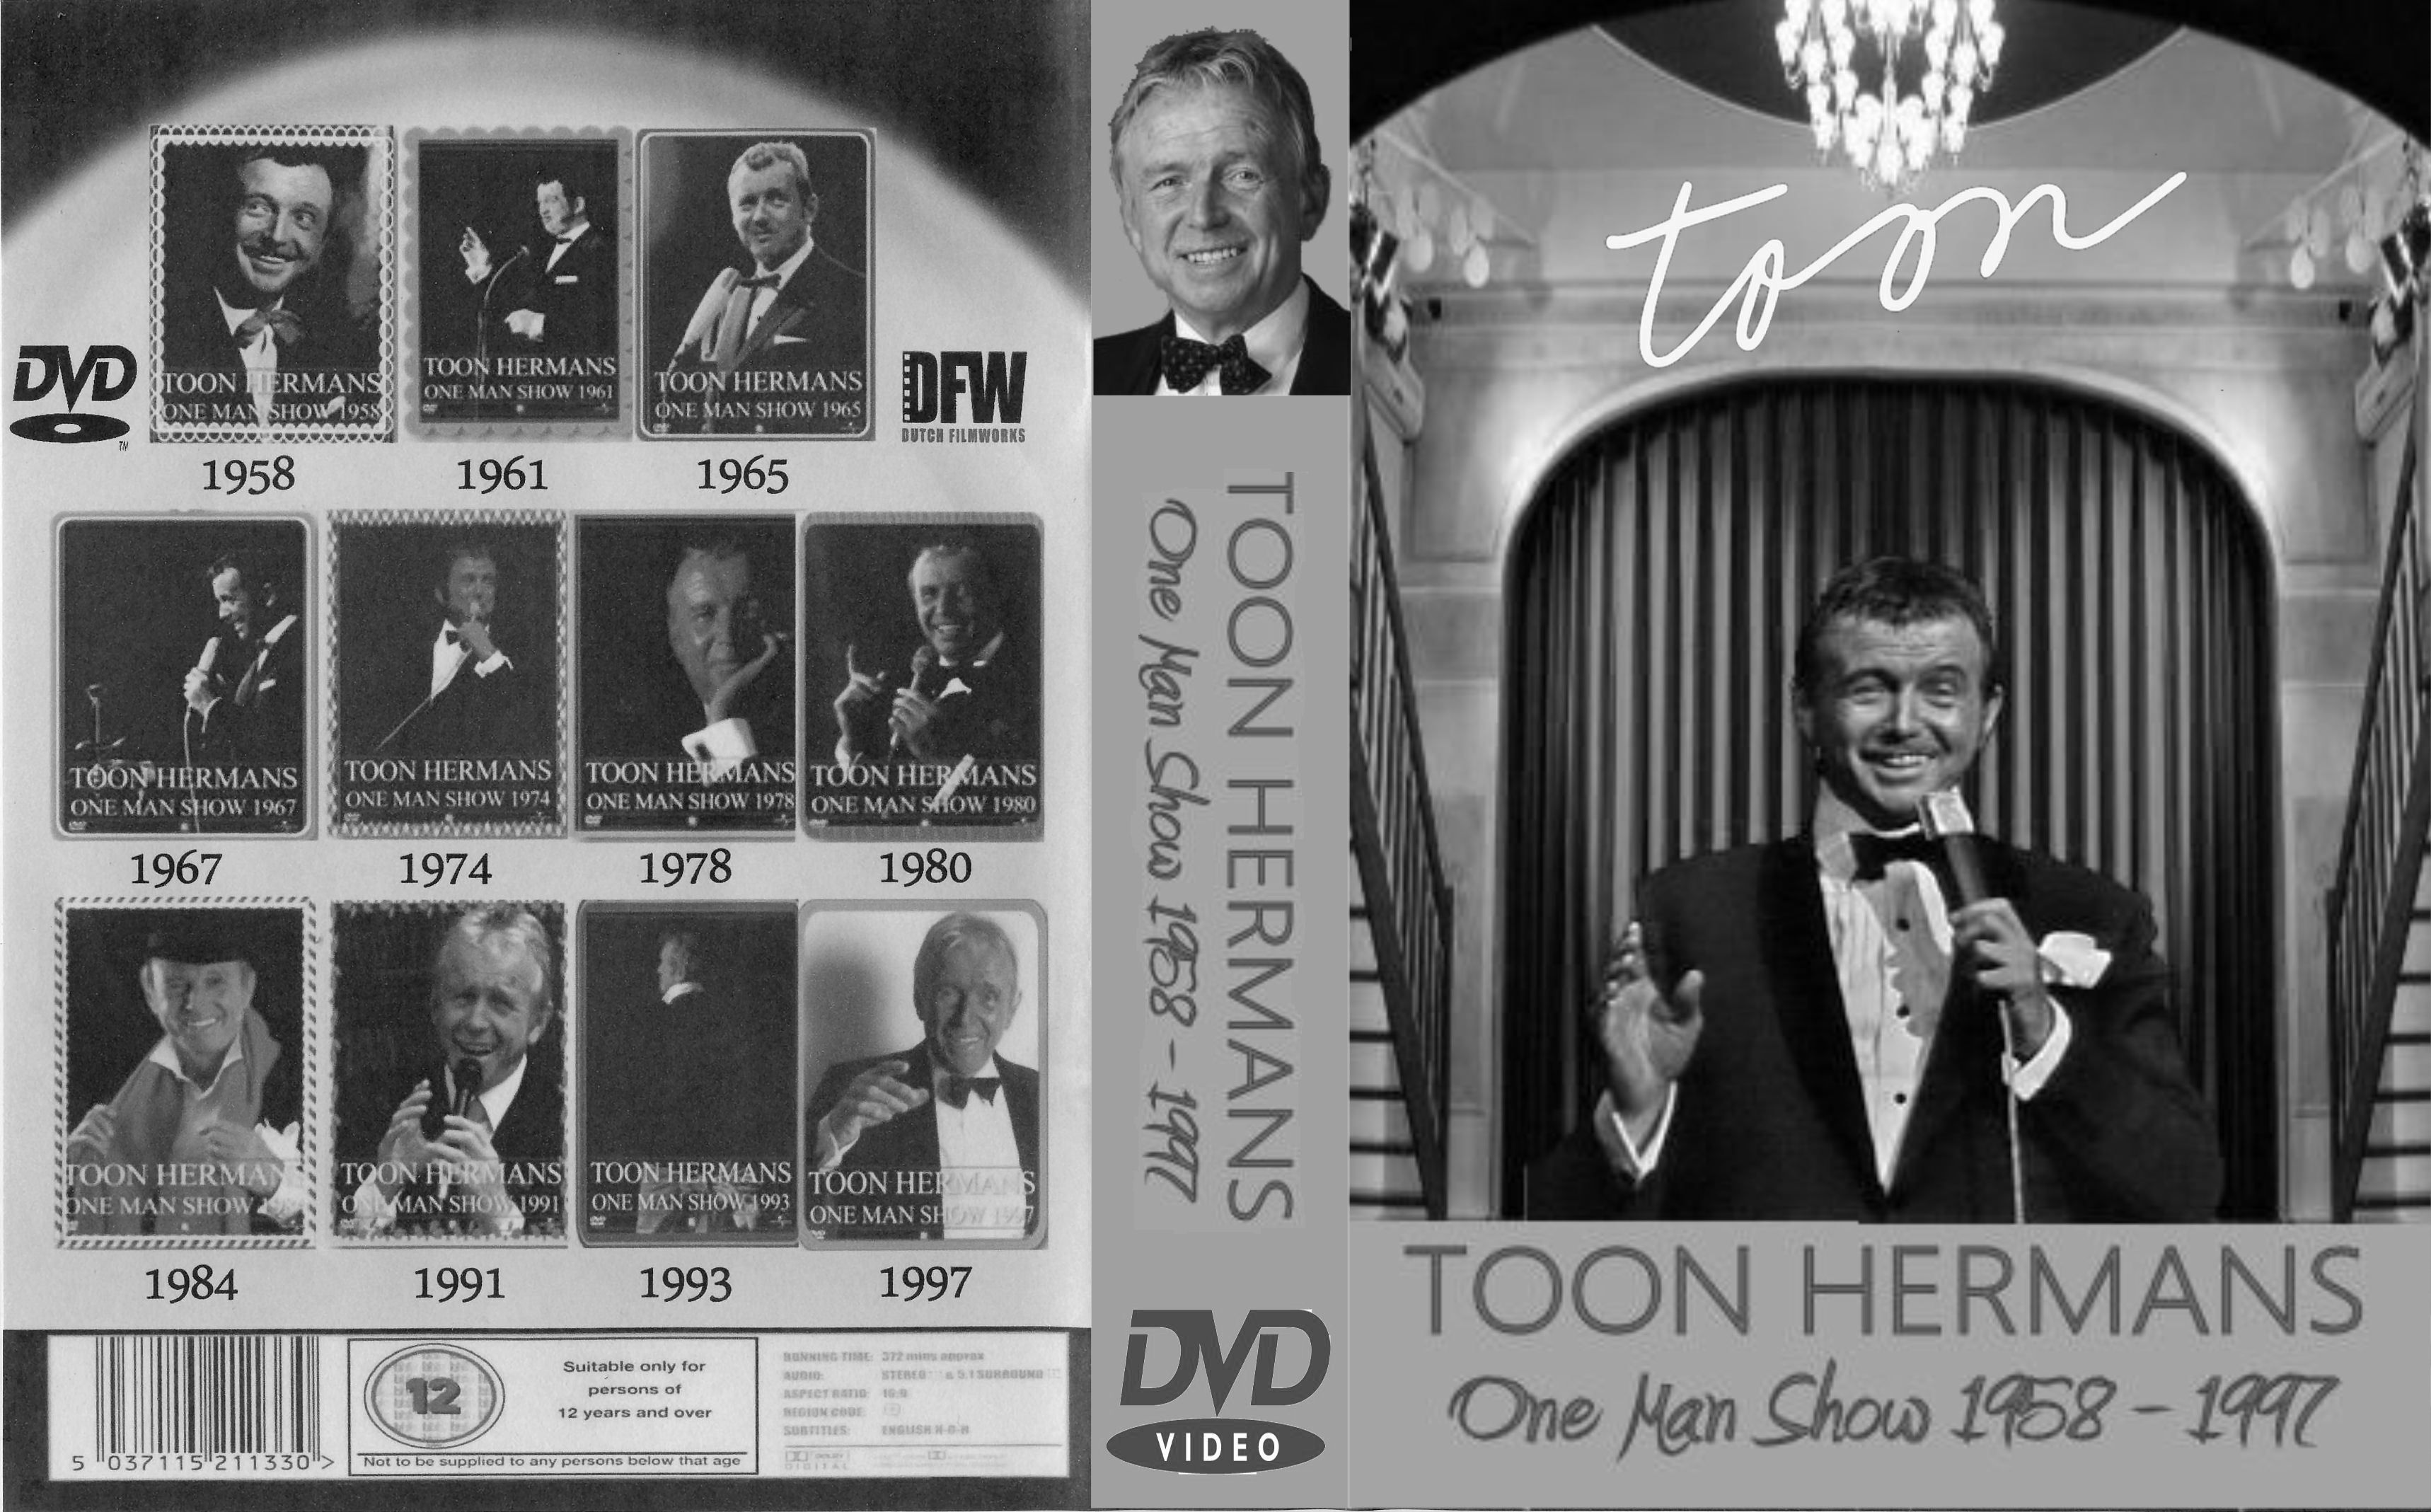 Toon Hermans One Man Show 1958 - 1997 - DvD 2 (1961)